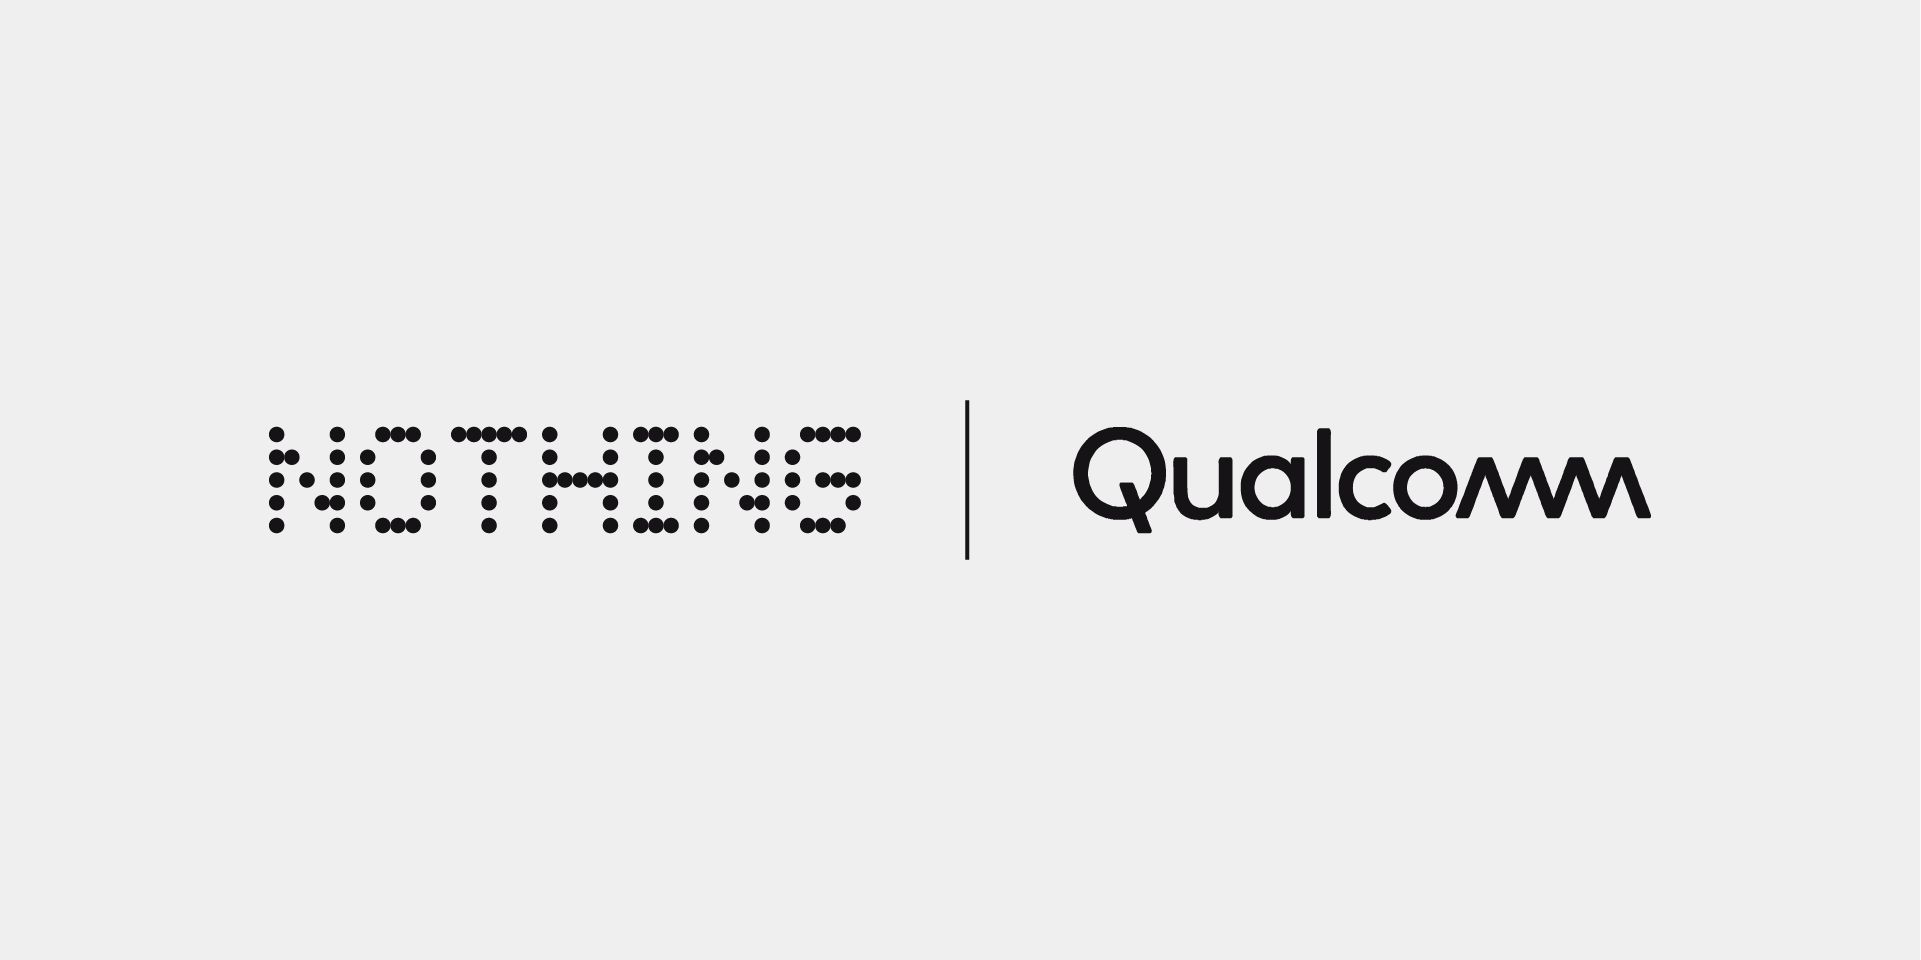 Promo image for Nothing and Qualcomm partnership